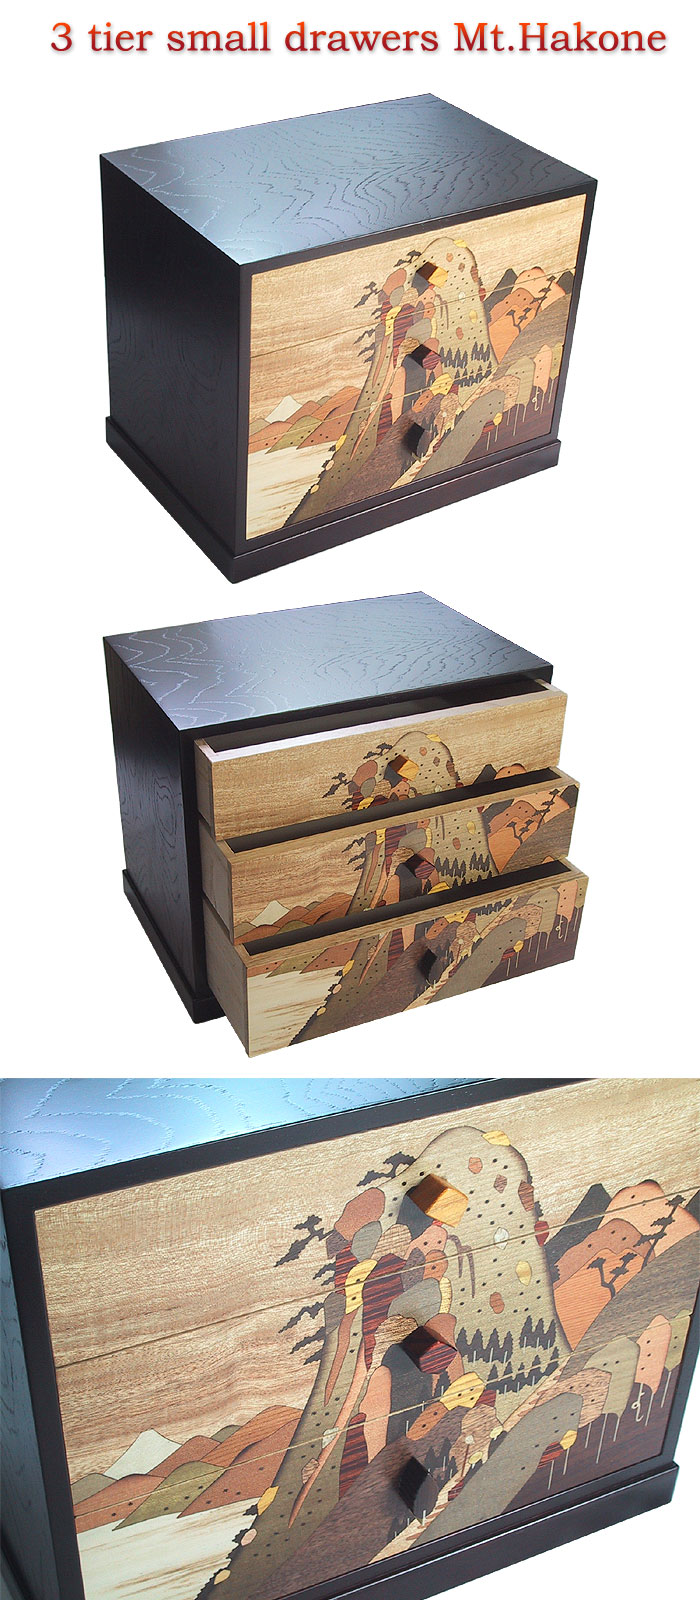 3 tier small drawers Mt.Hakone